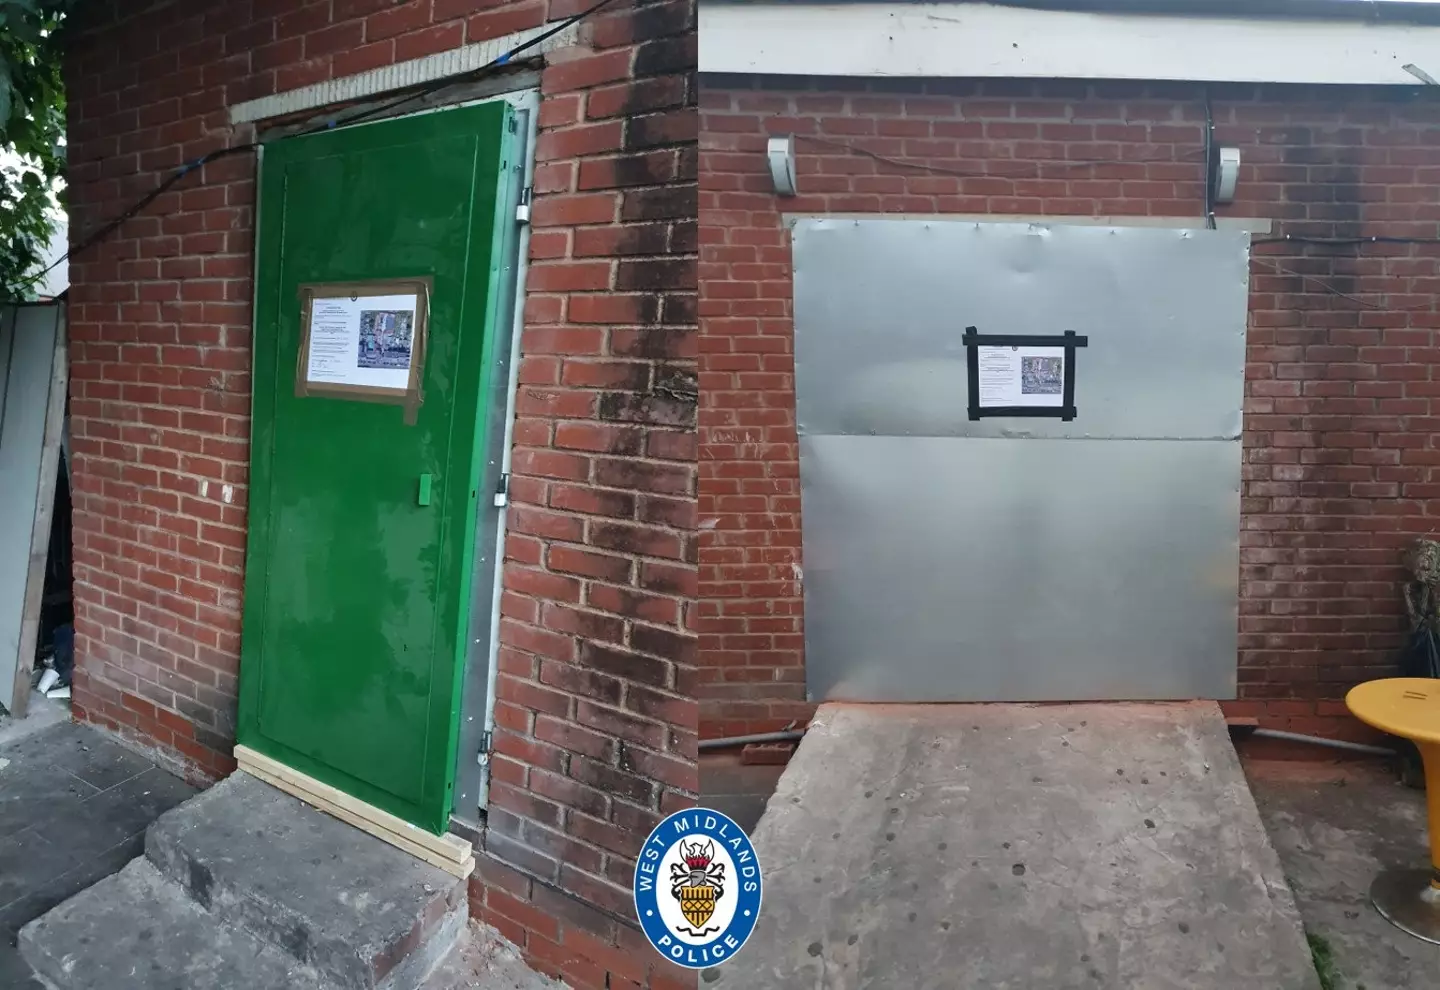 The nightclub hidden in a Birmingham alleyway was operating illegally.